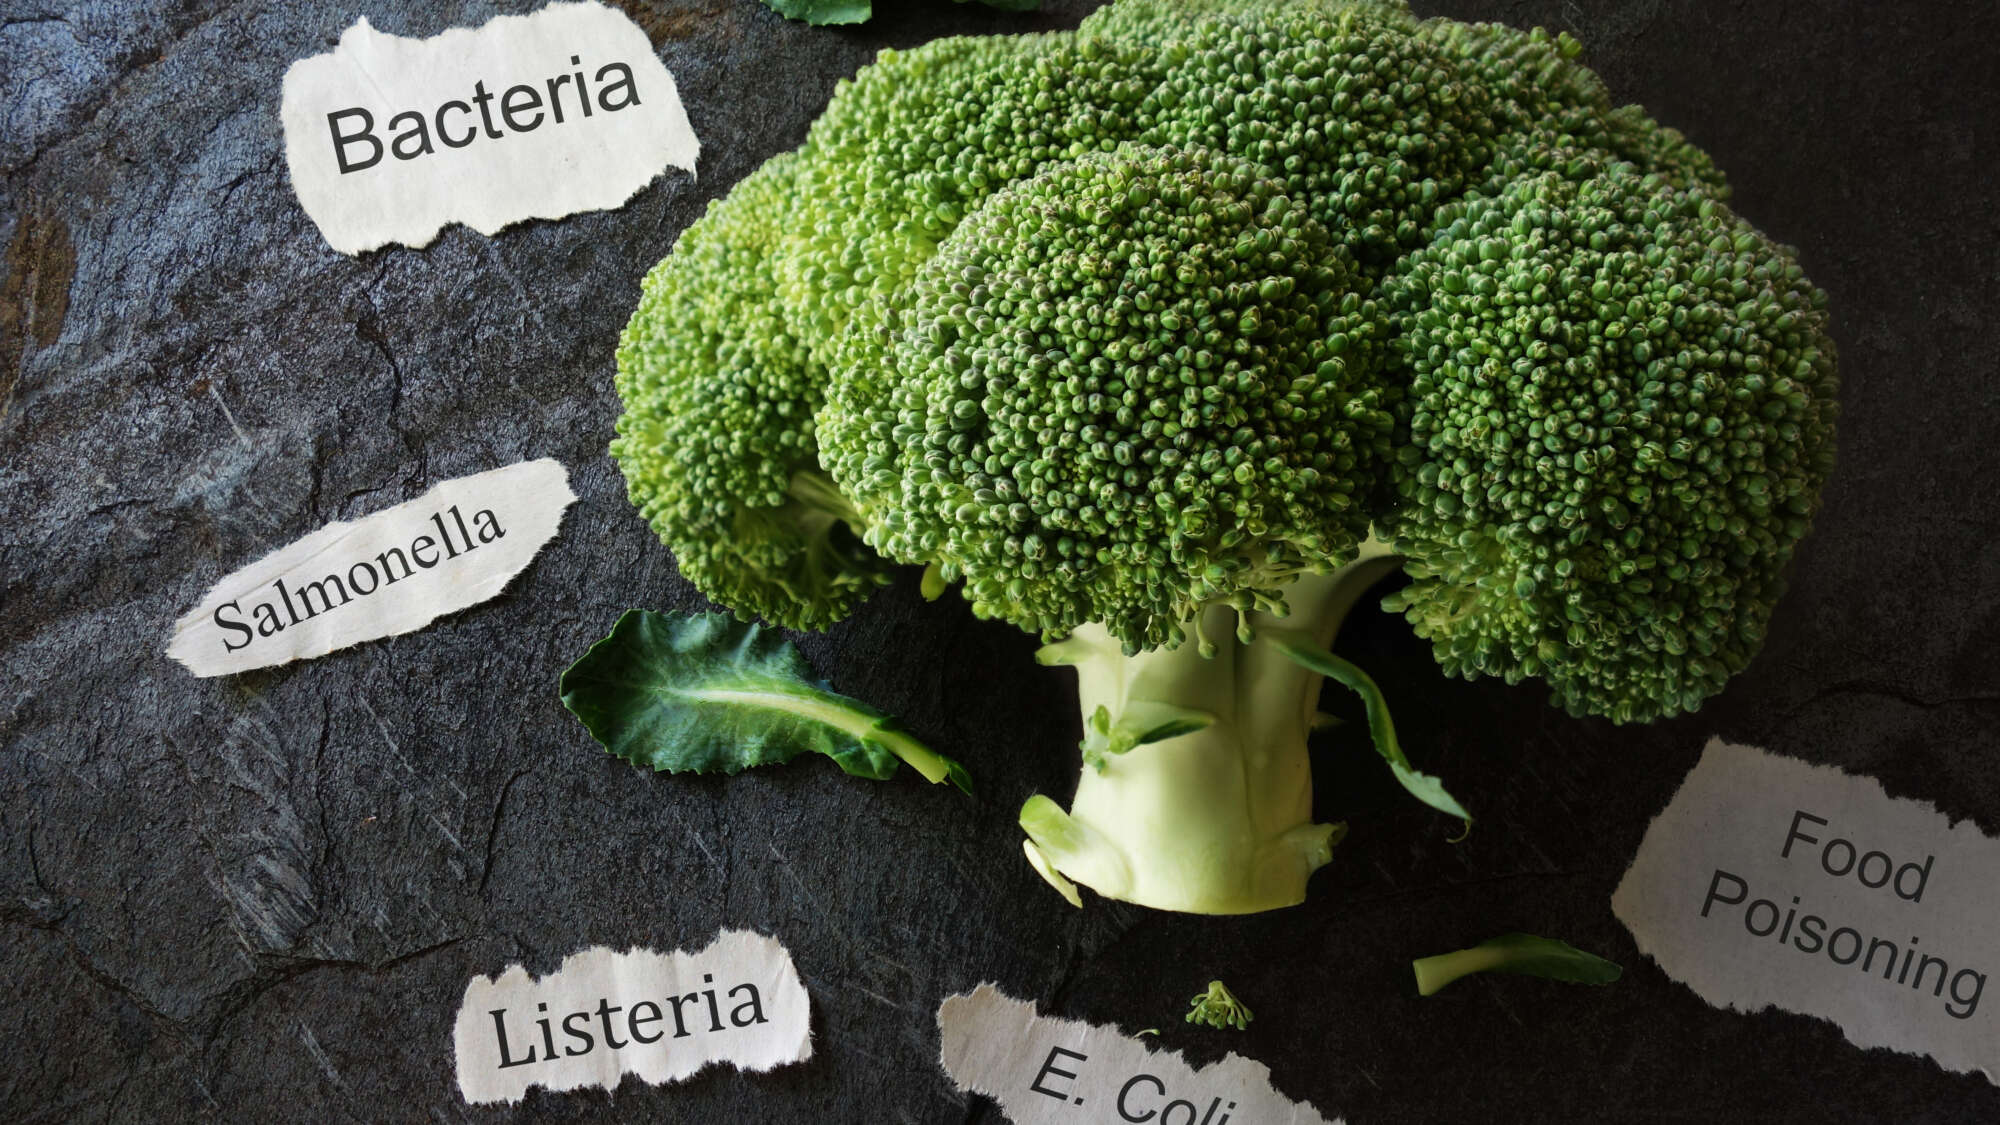 Image of Broccoli with foodborne illnesses